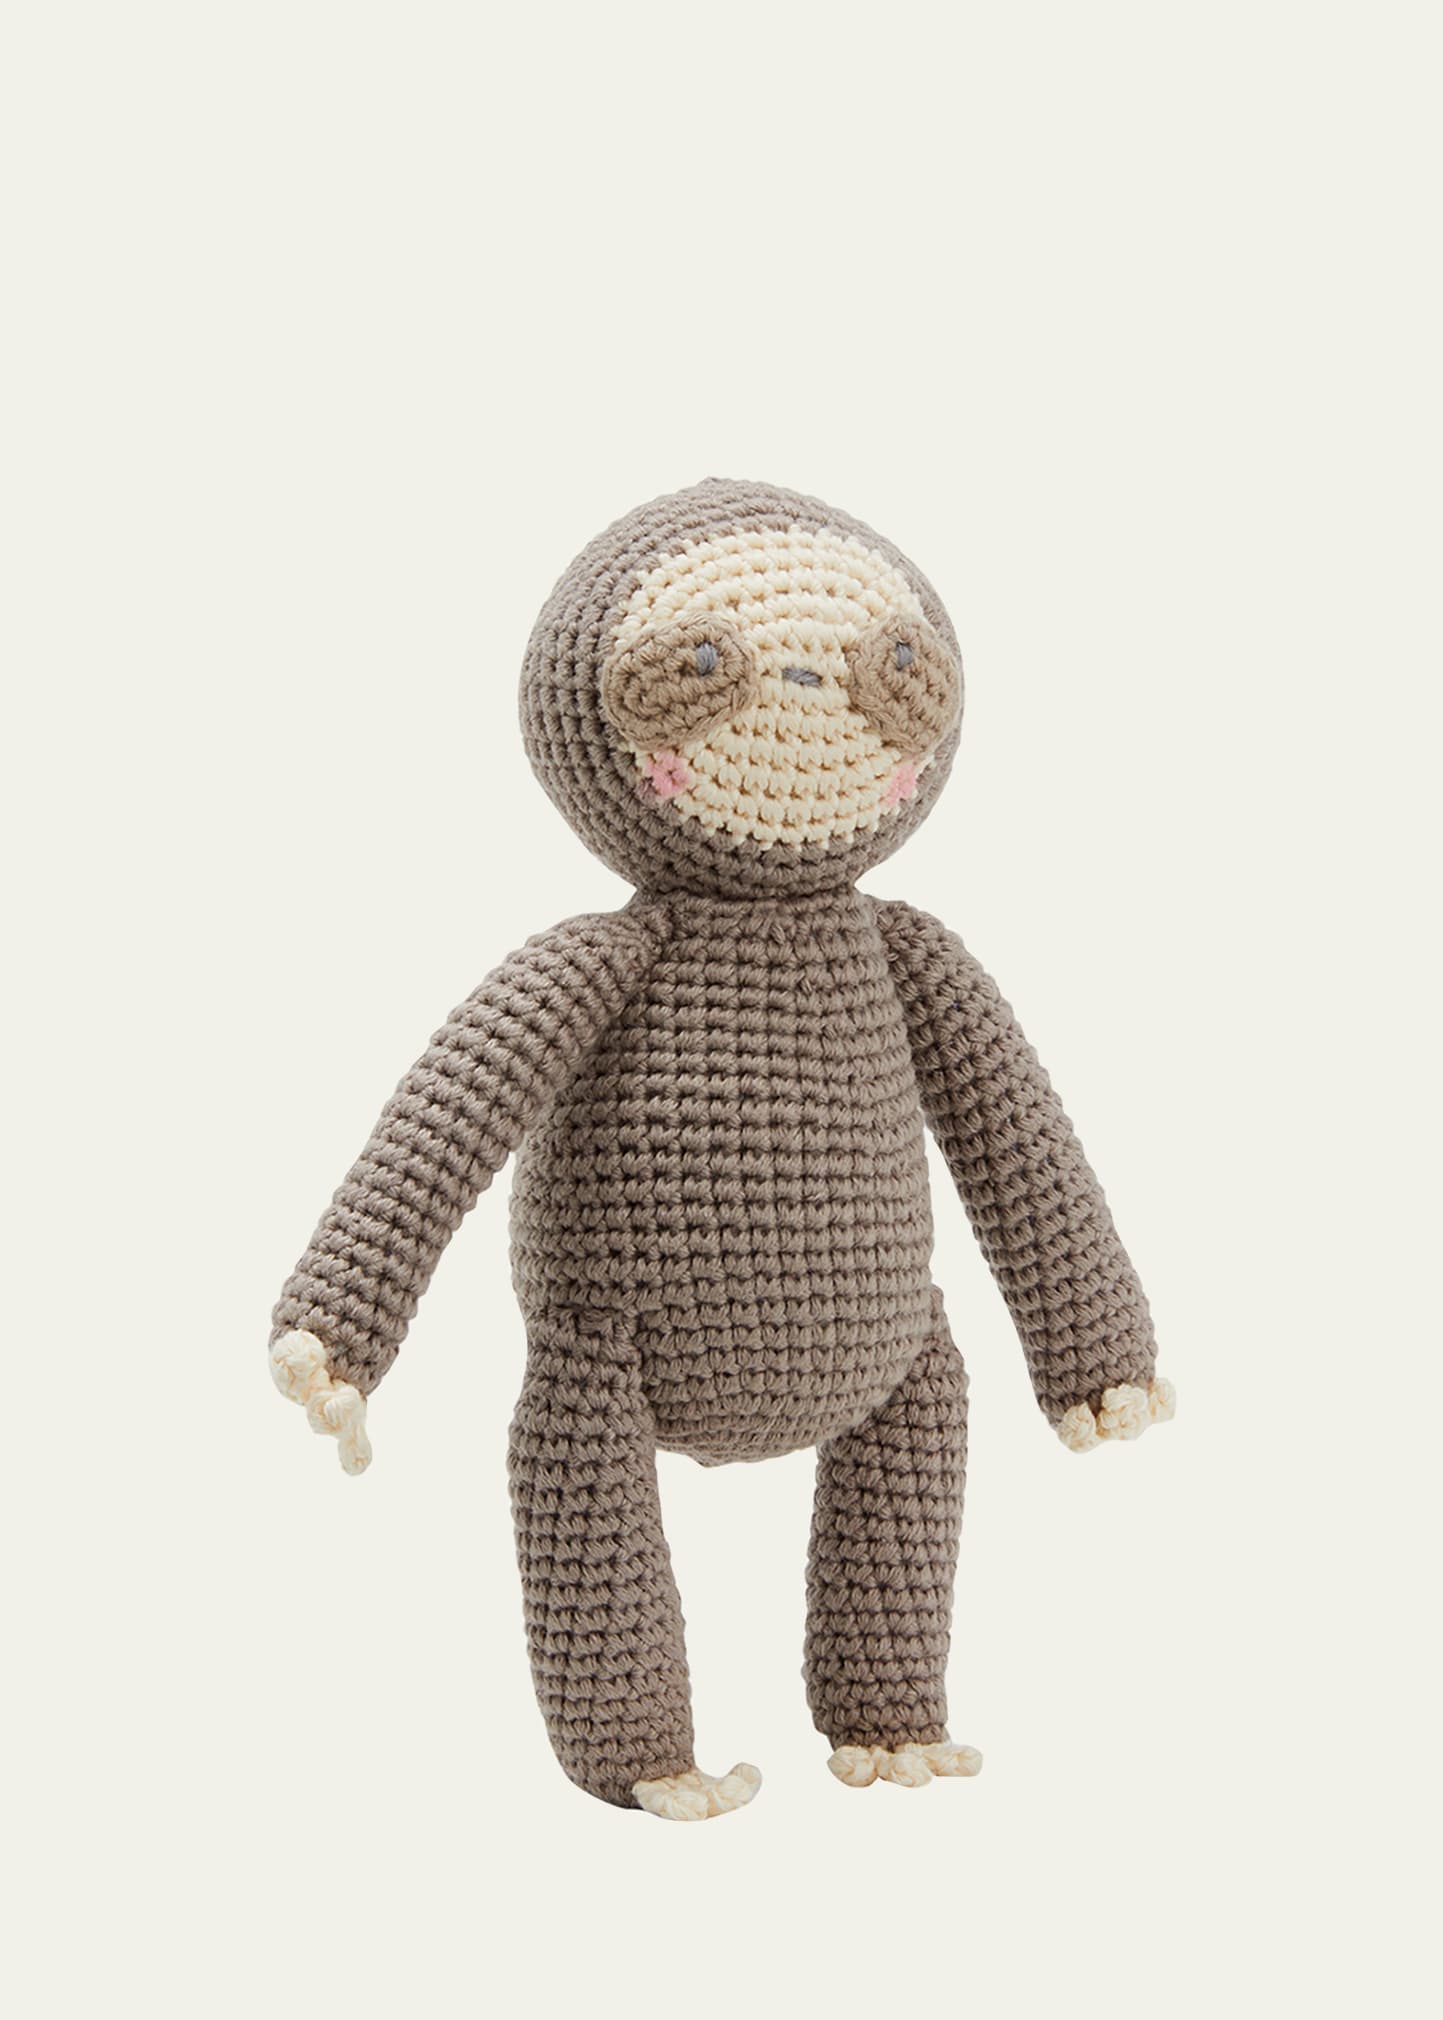 Samuel Sloth Crochet Rattle Toy